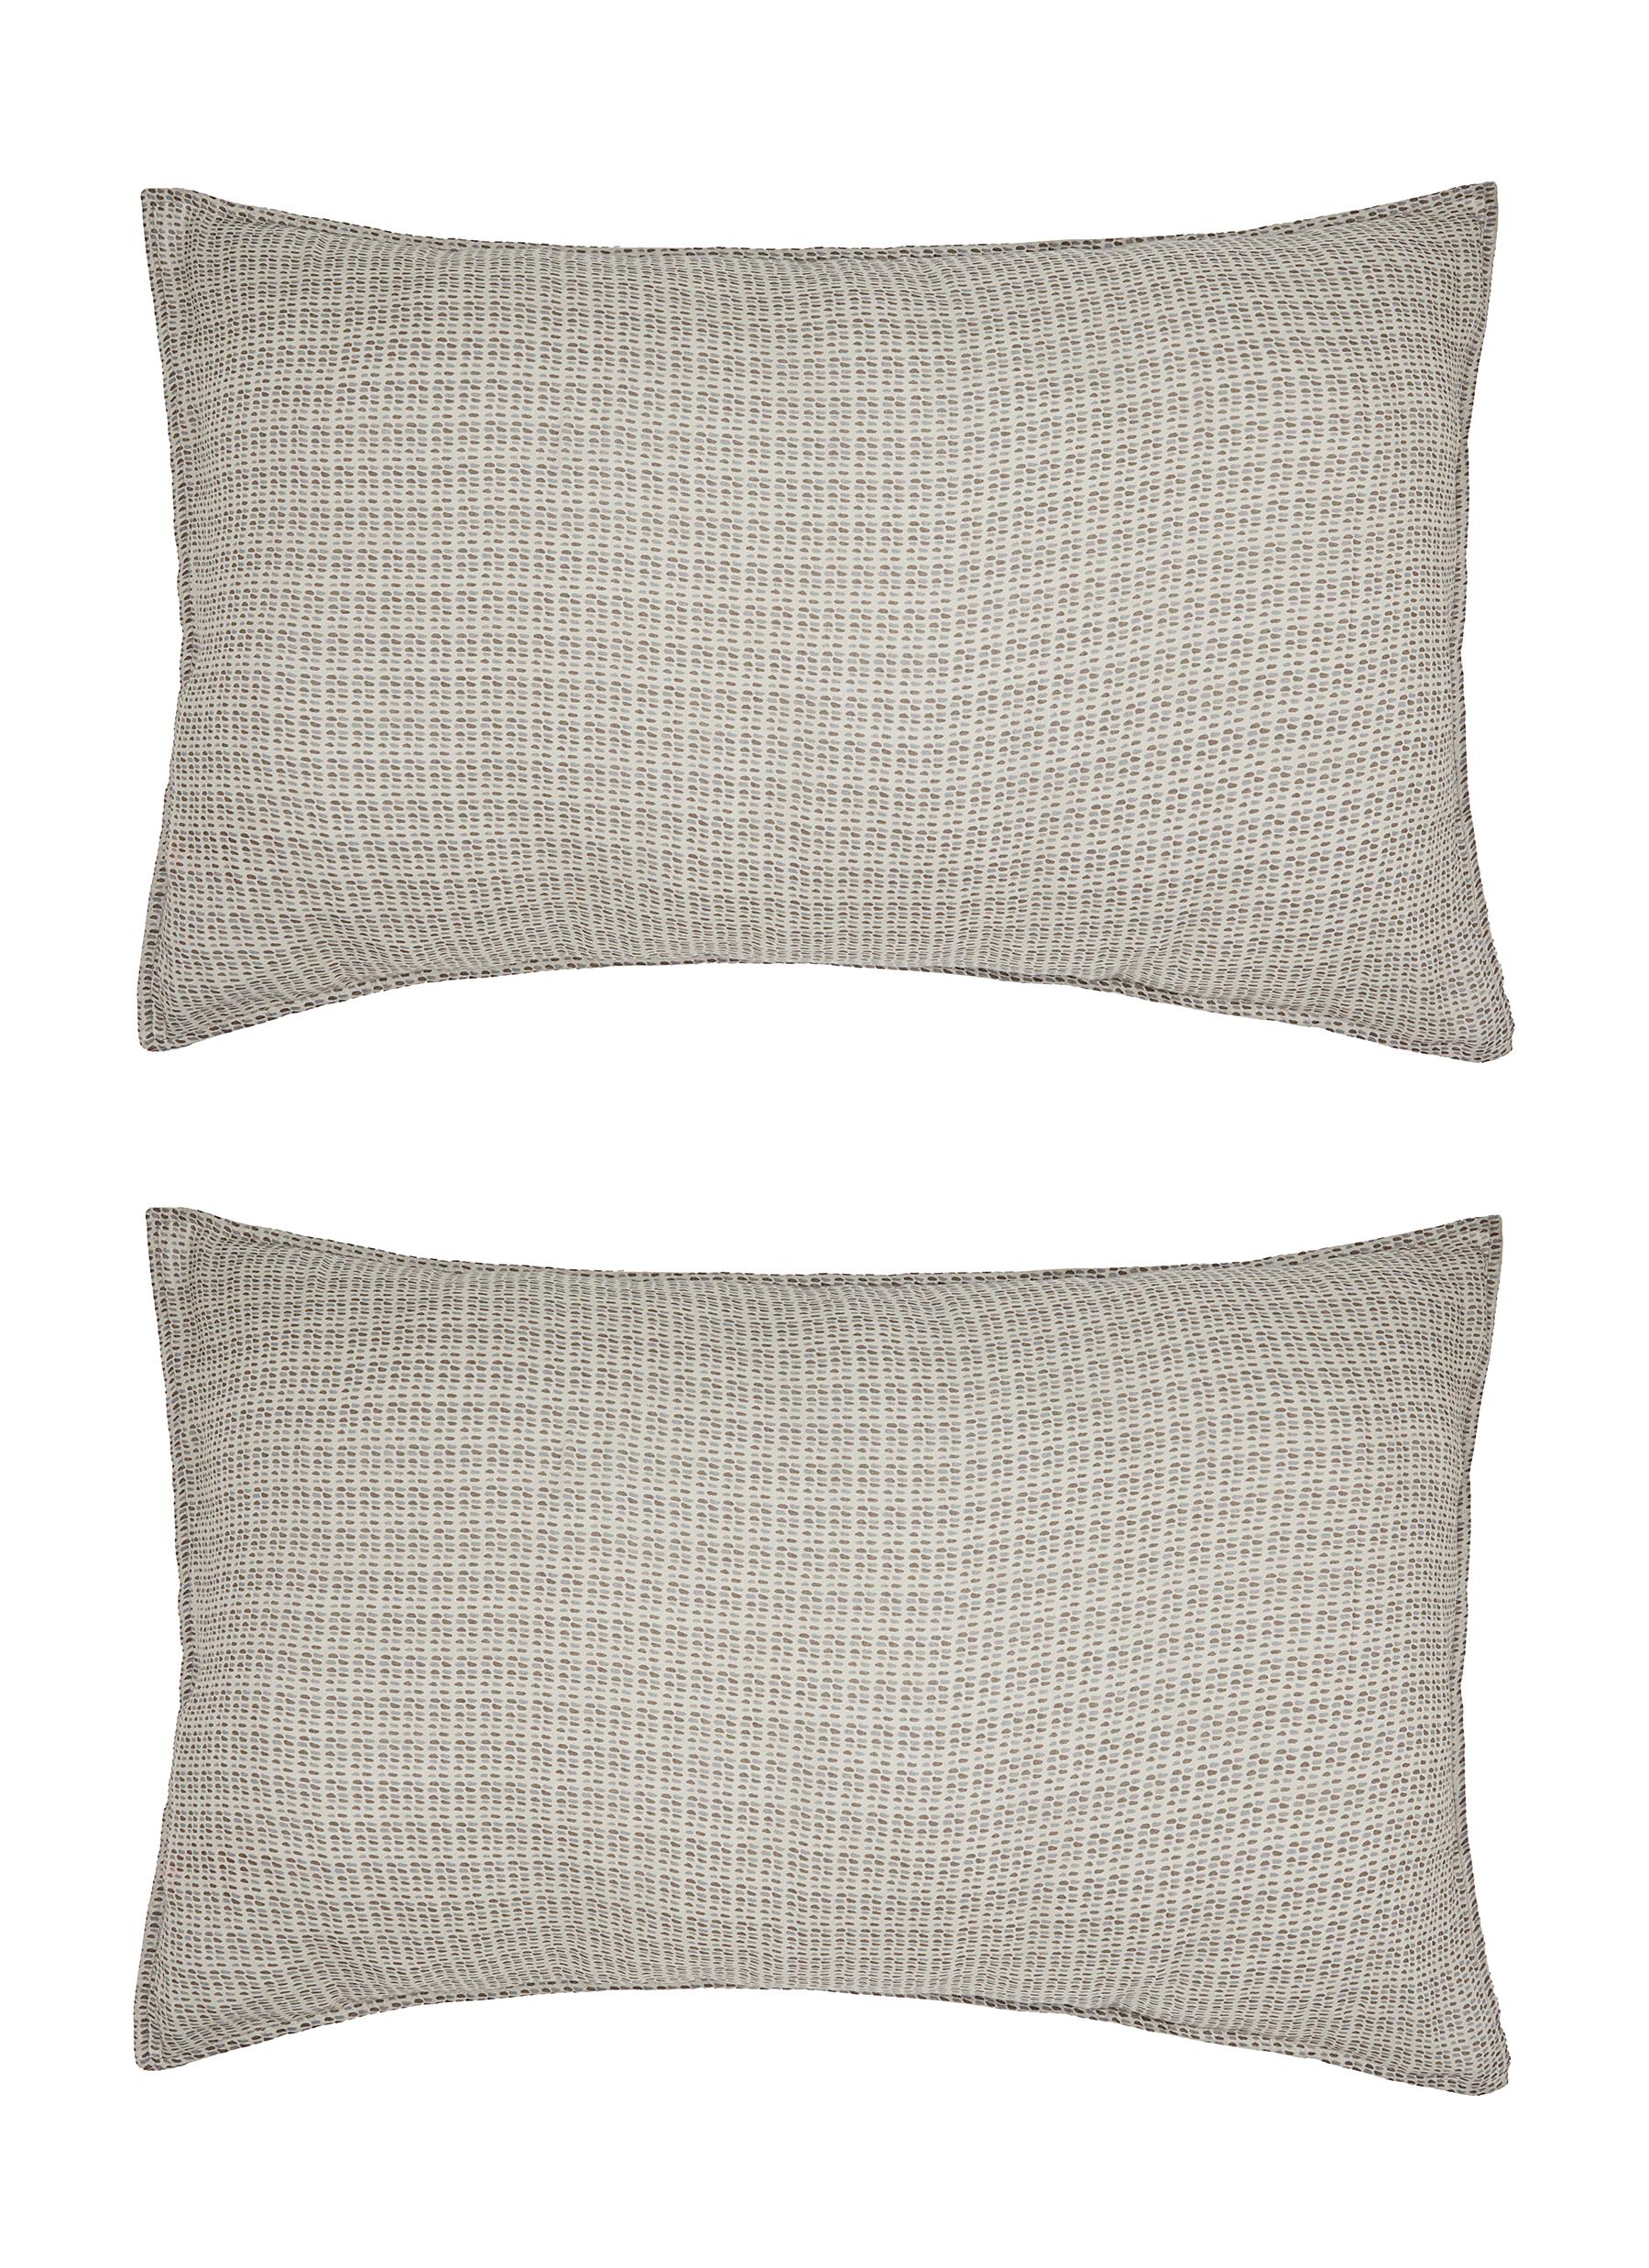 Nap Rice Pillowcase Set of 2 - Mastice